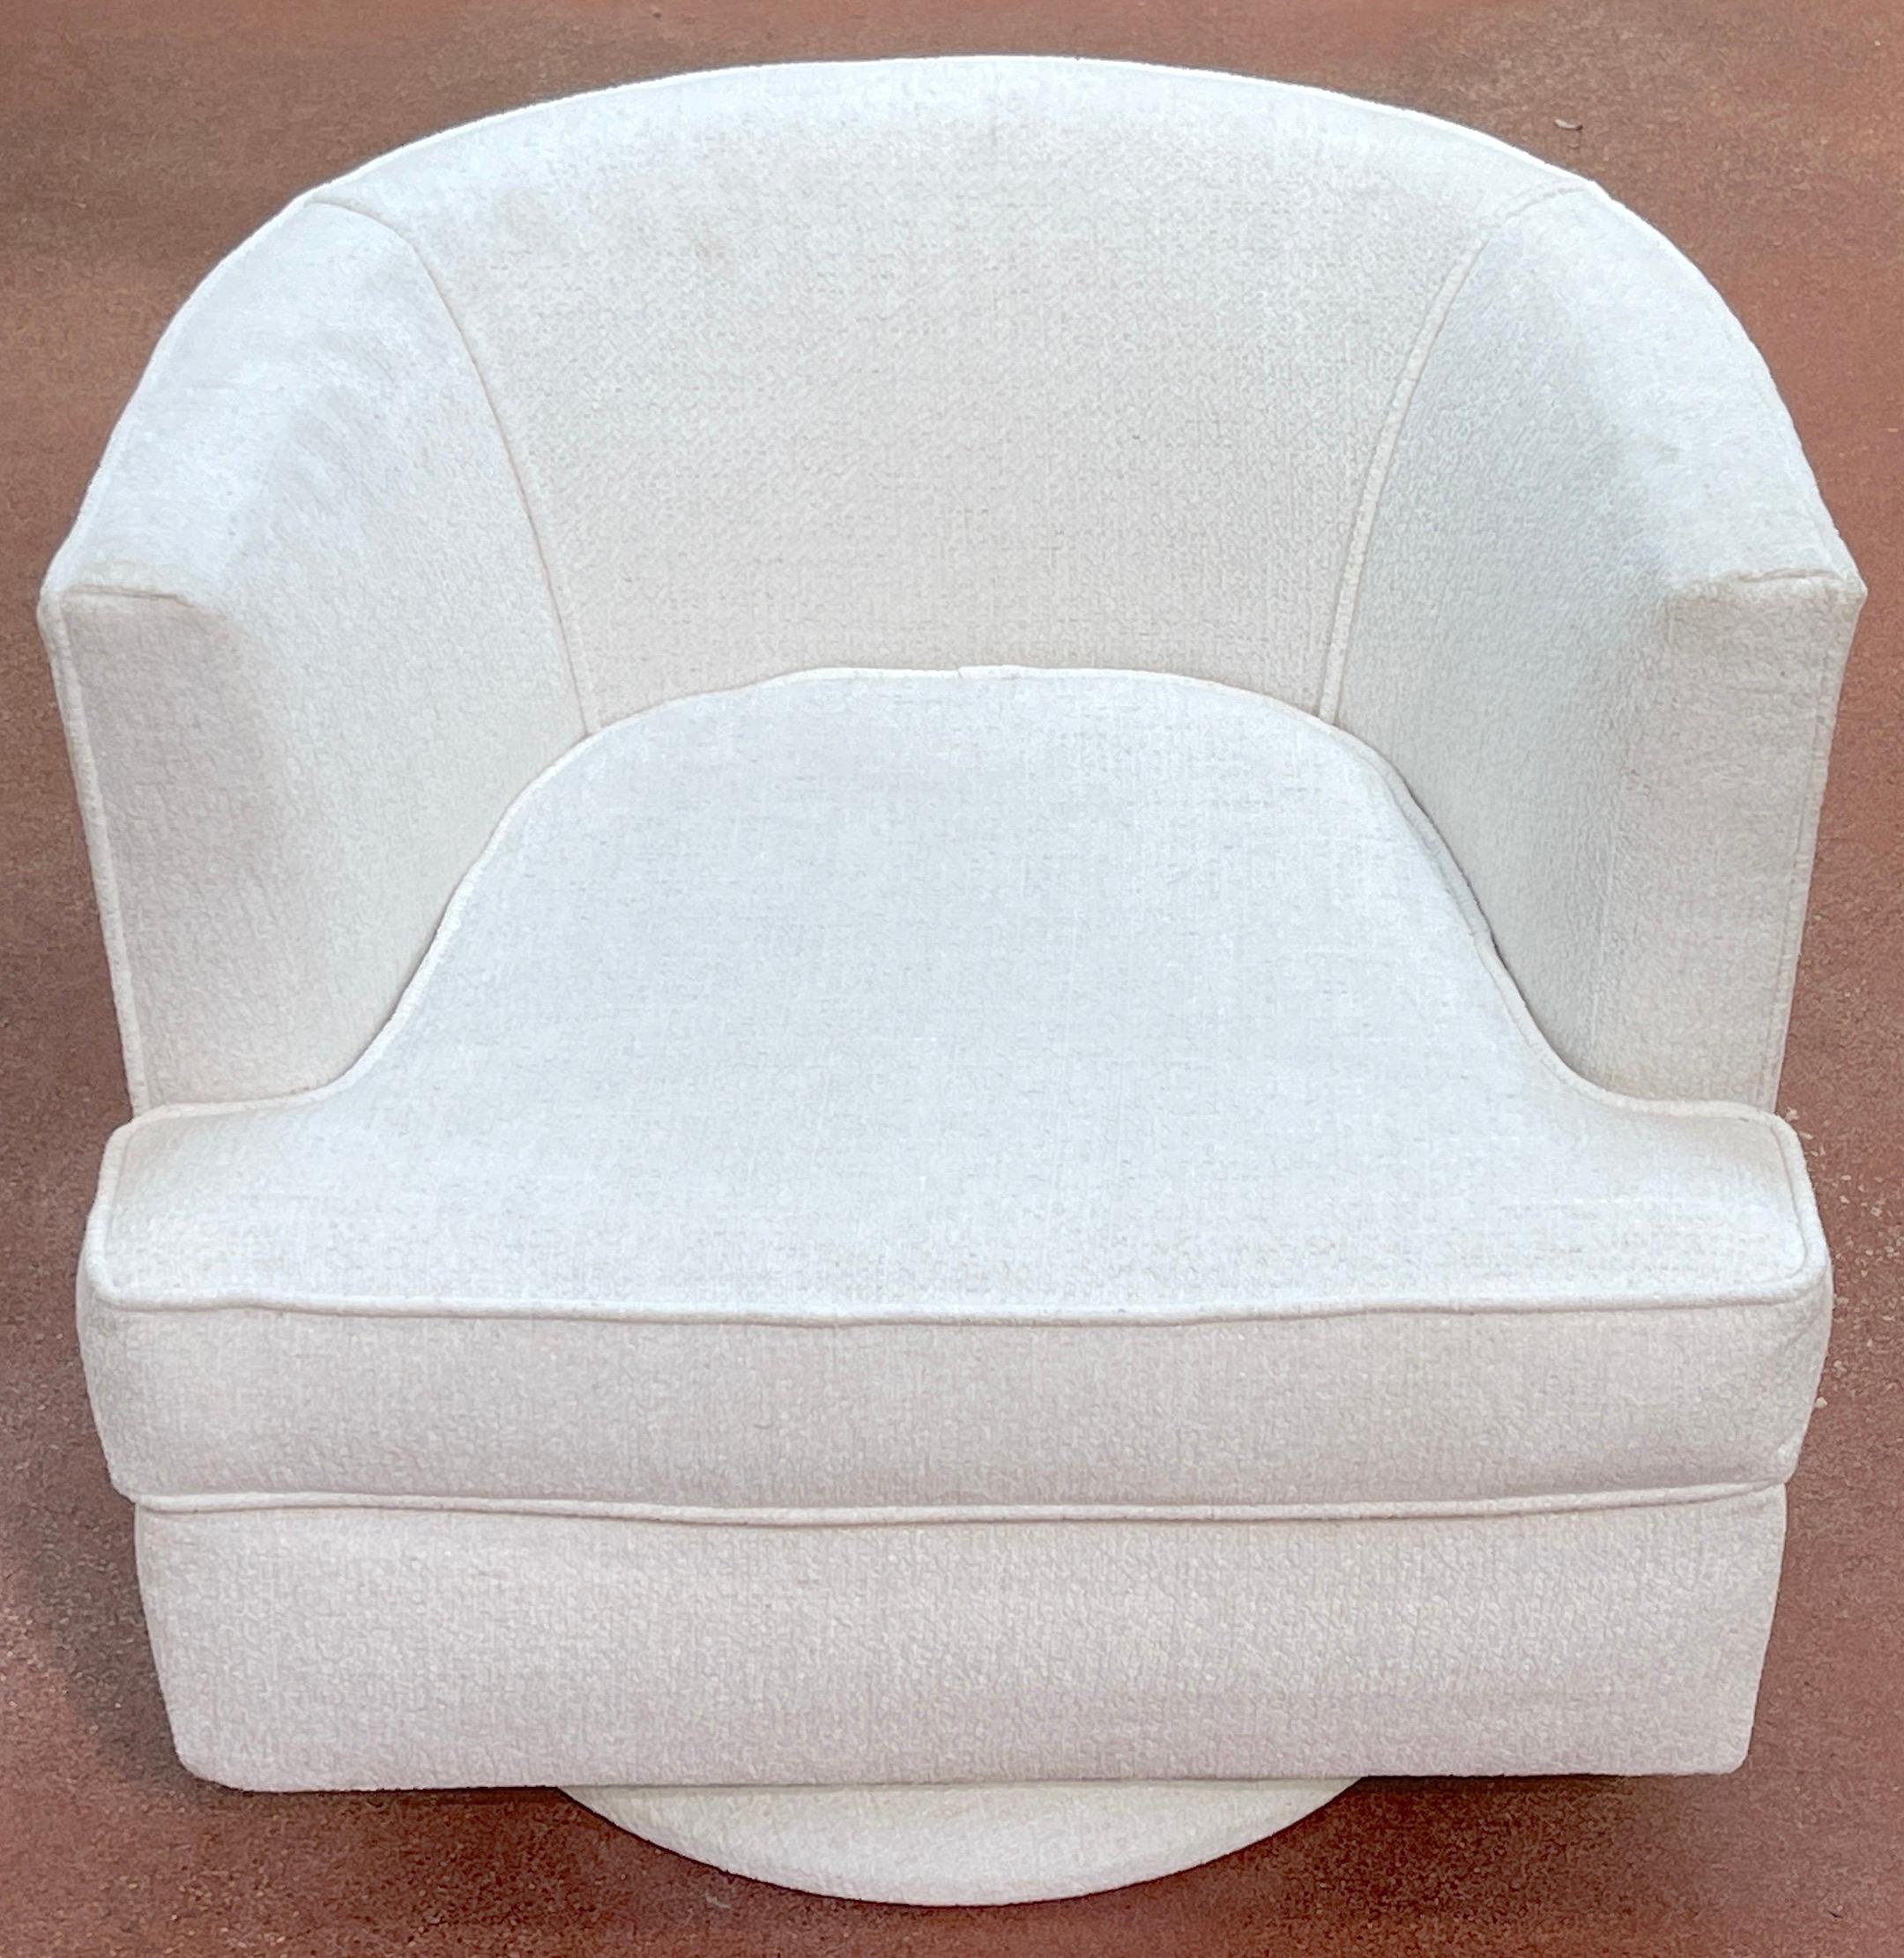 Pair of Sleek Mid-Century Modern Swivel Chairs Kravet Boucle Fabric, C. 1970s For Sale 1